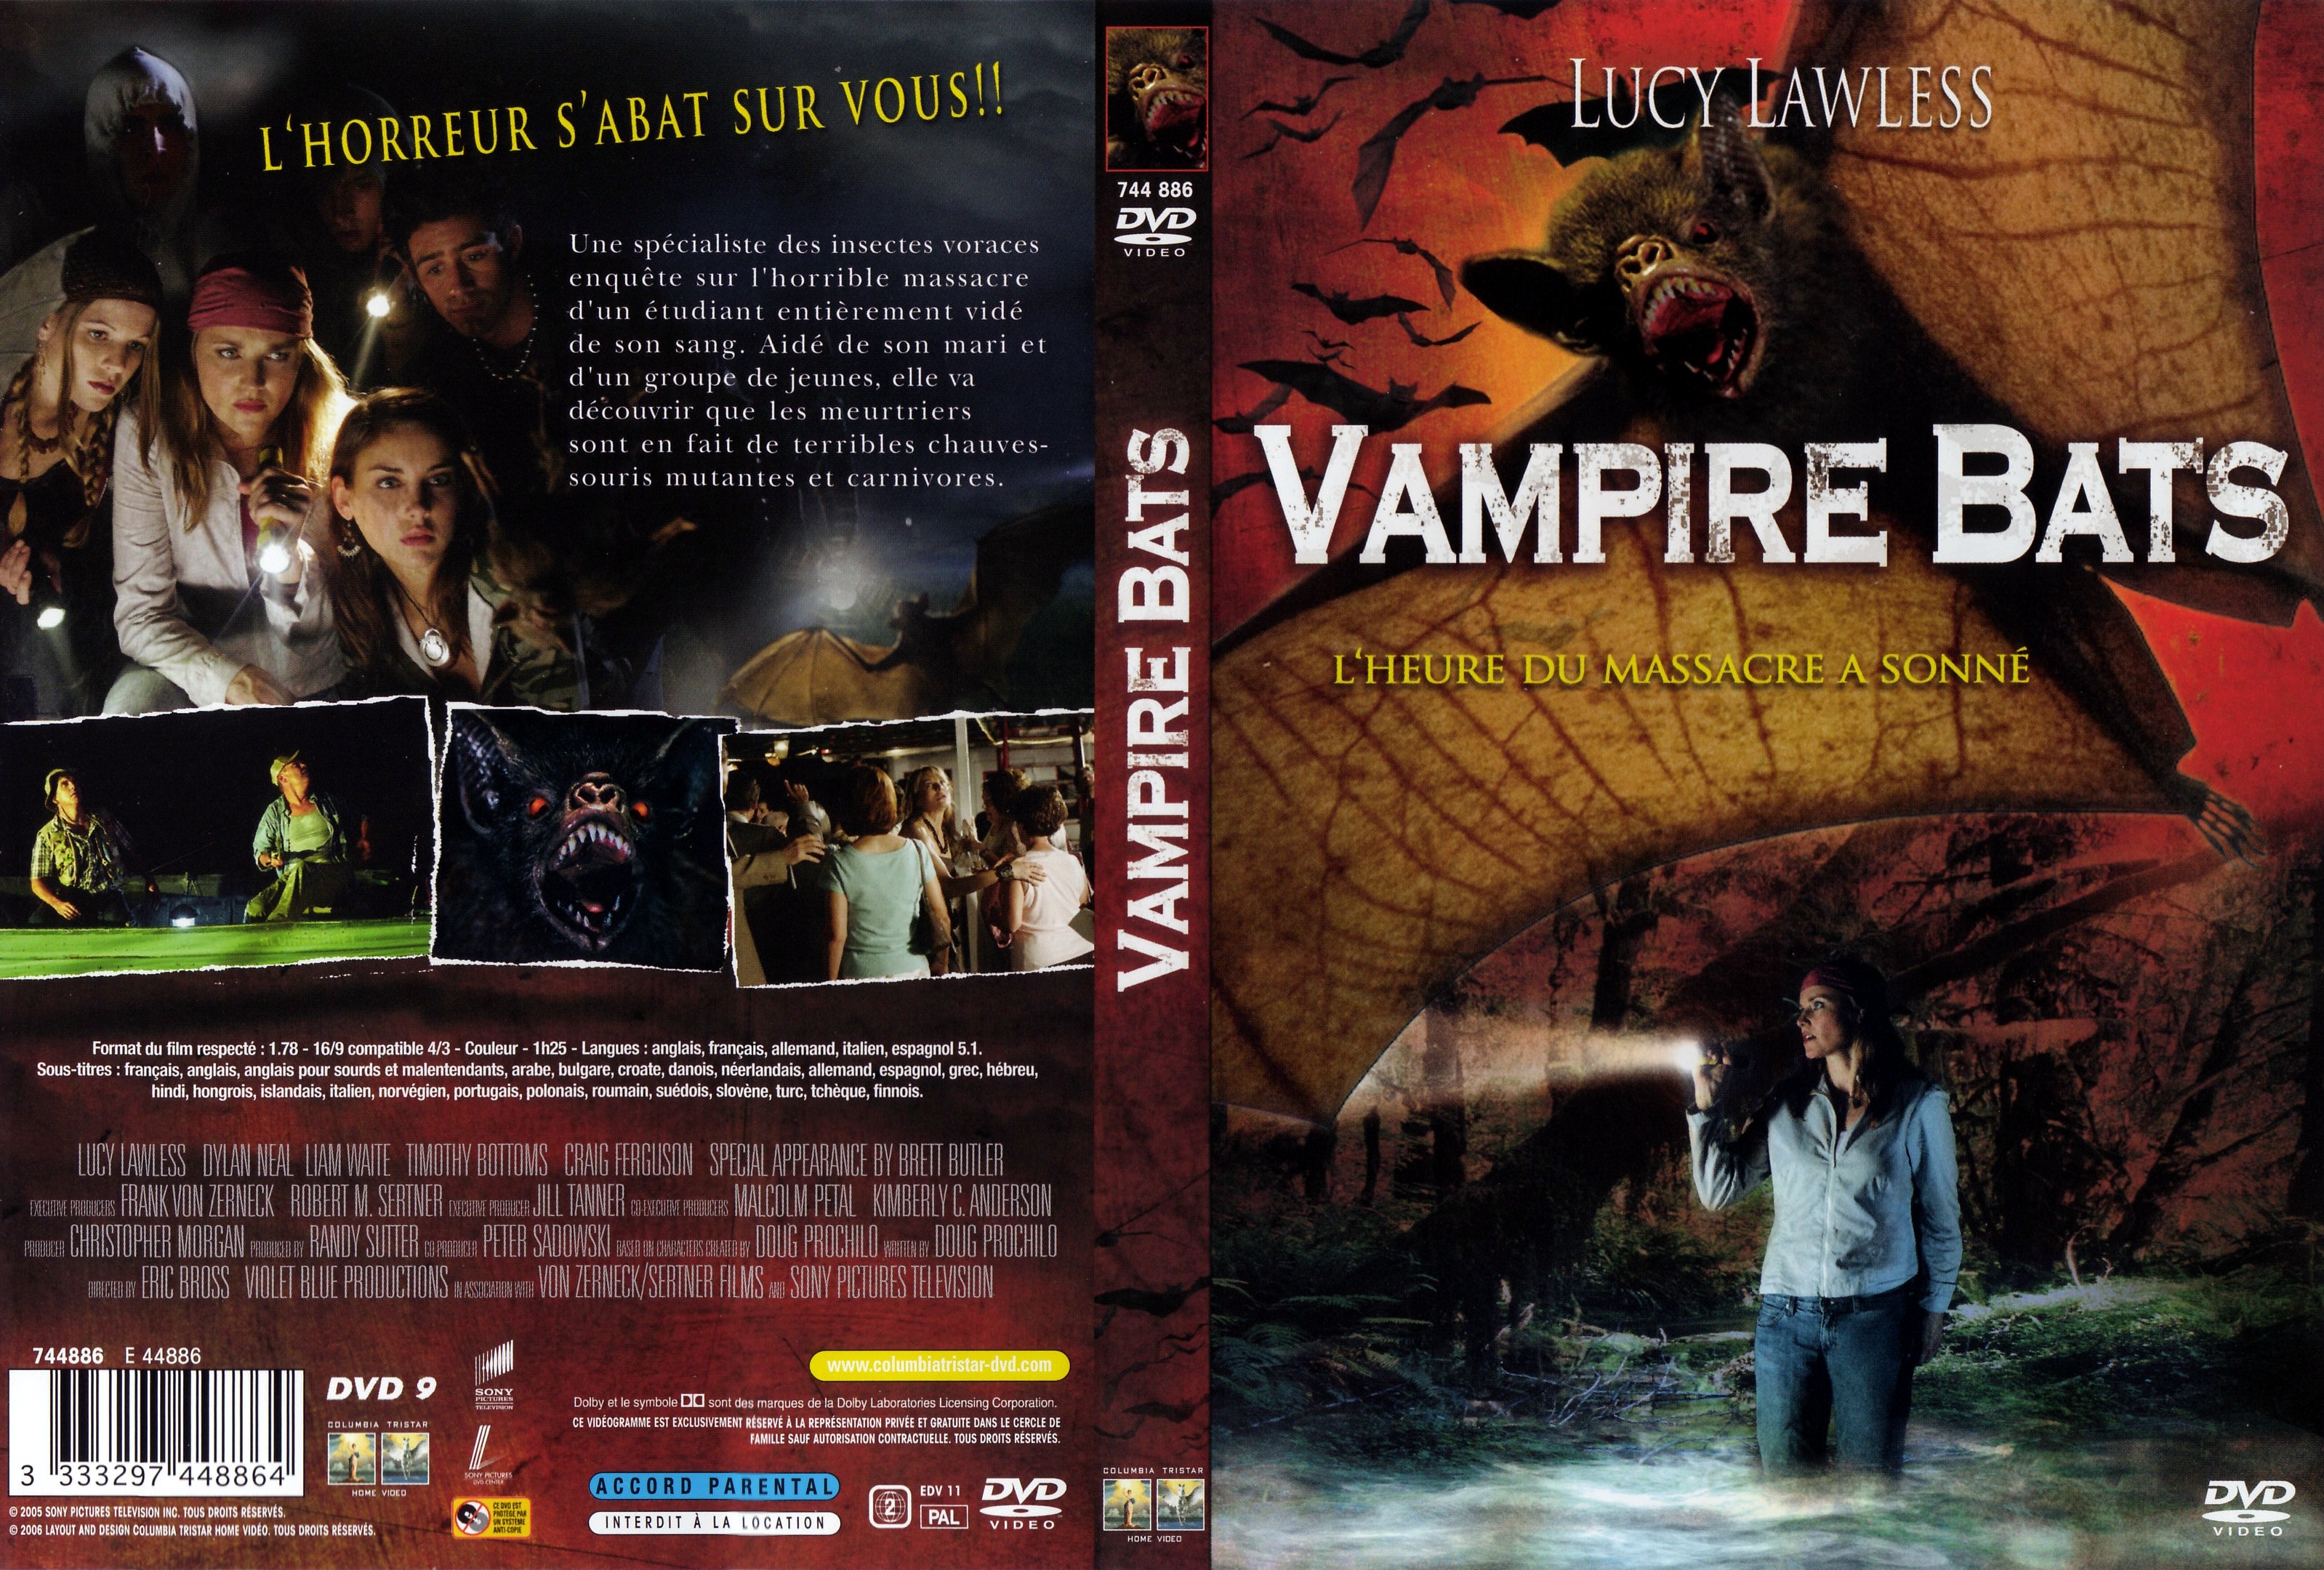 Jaquette DVD Vampire bats